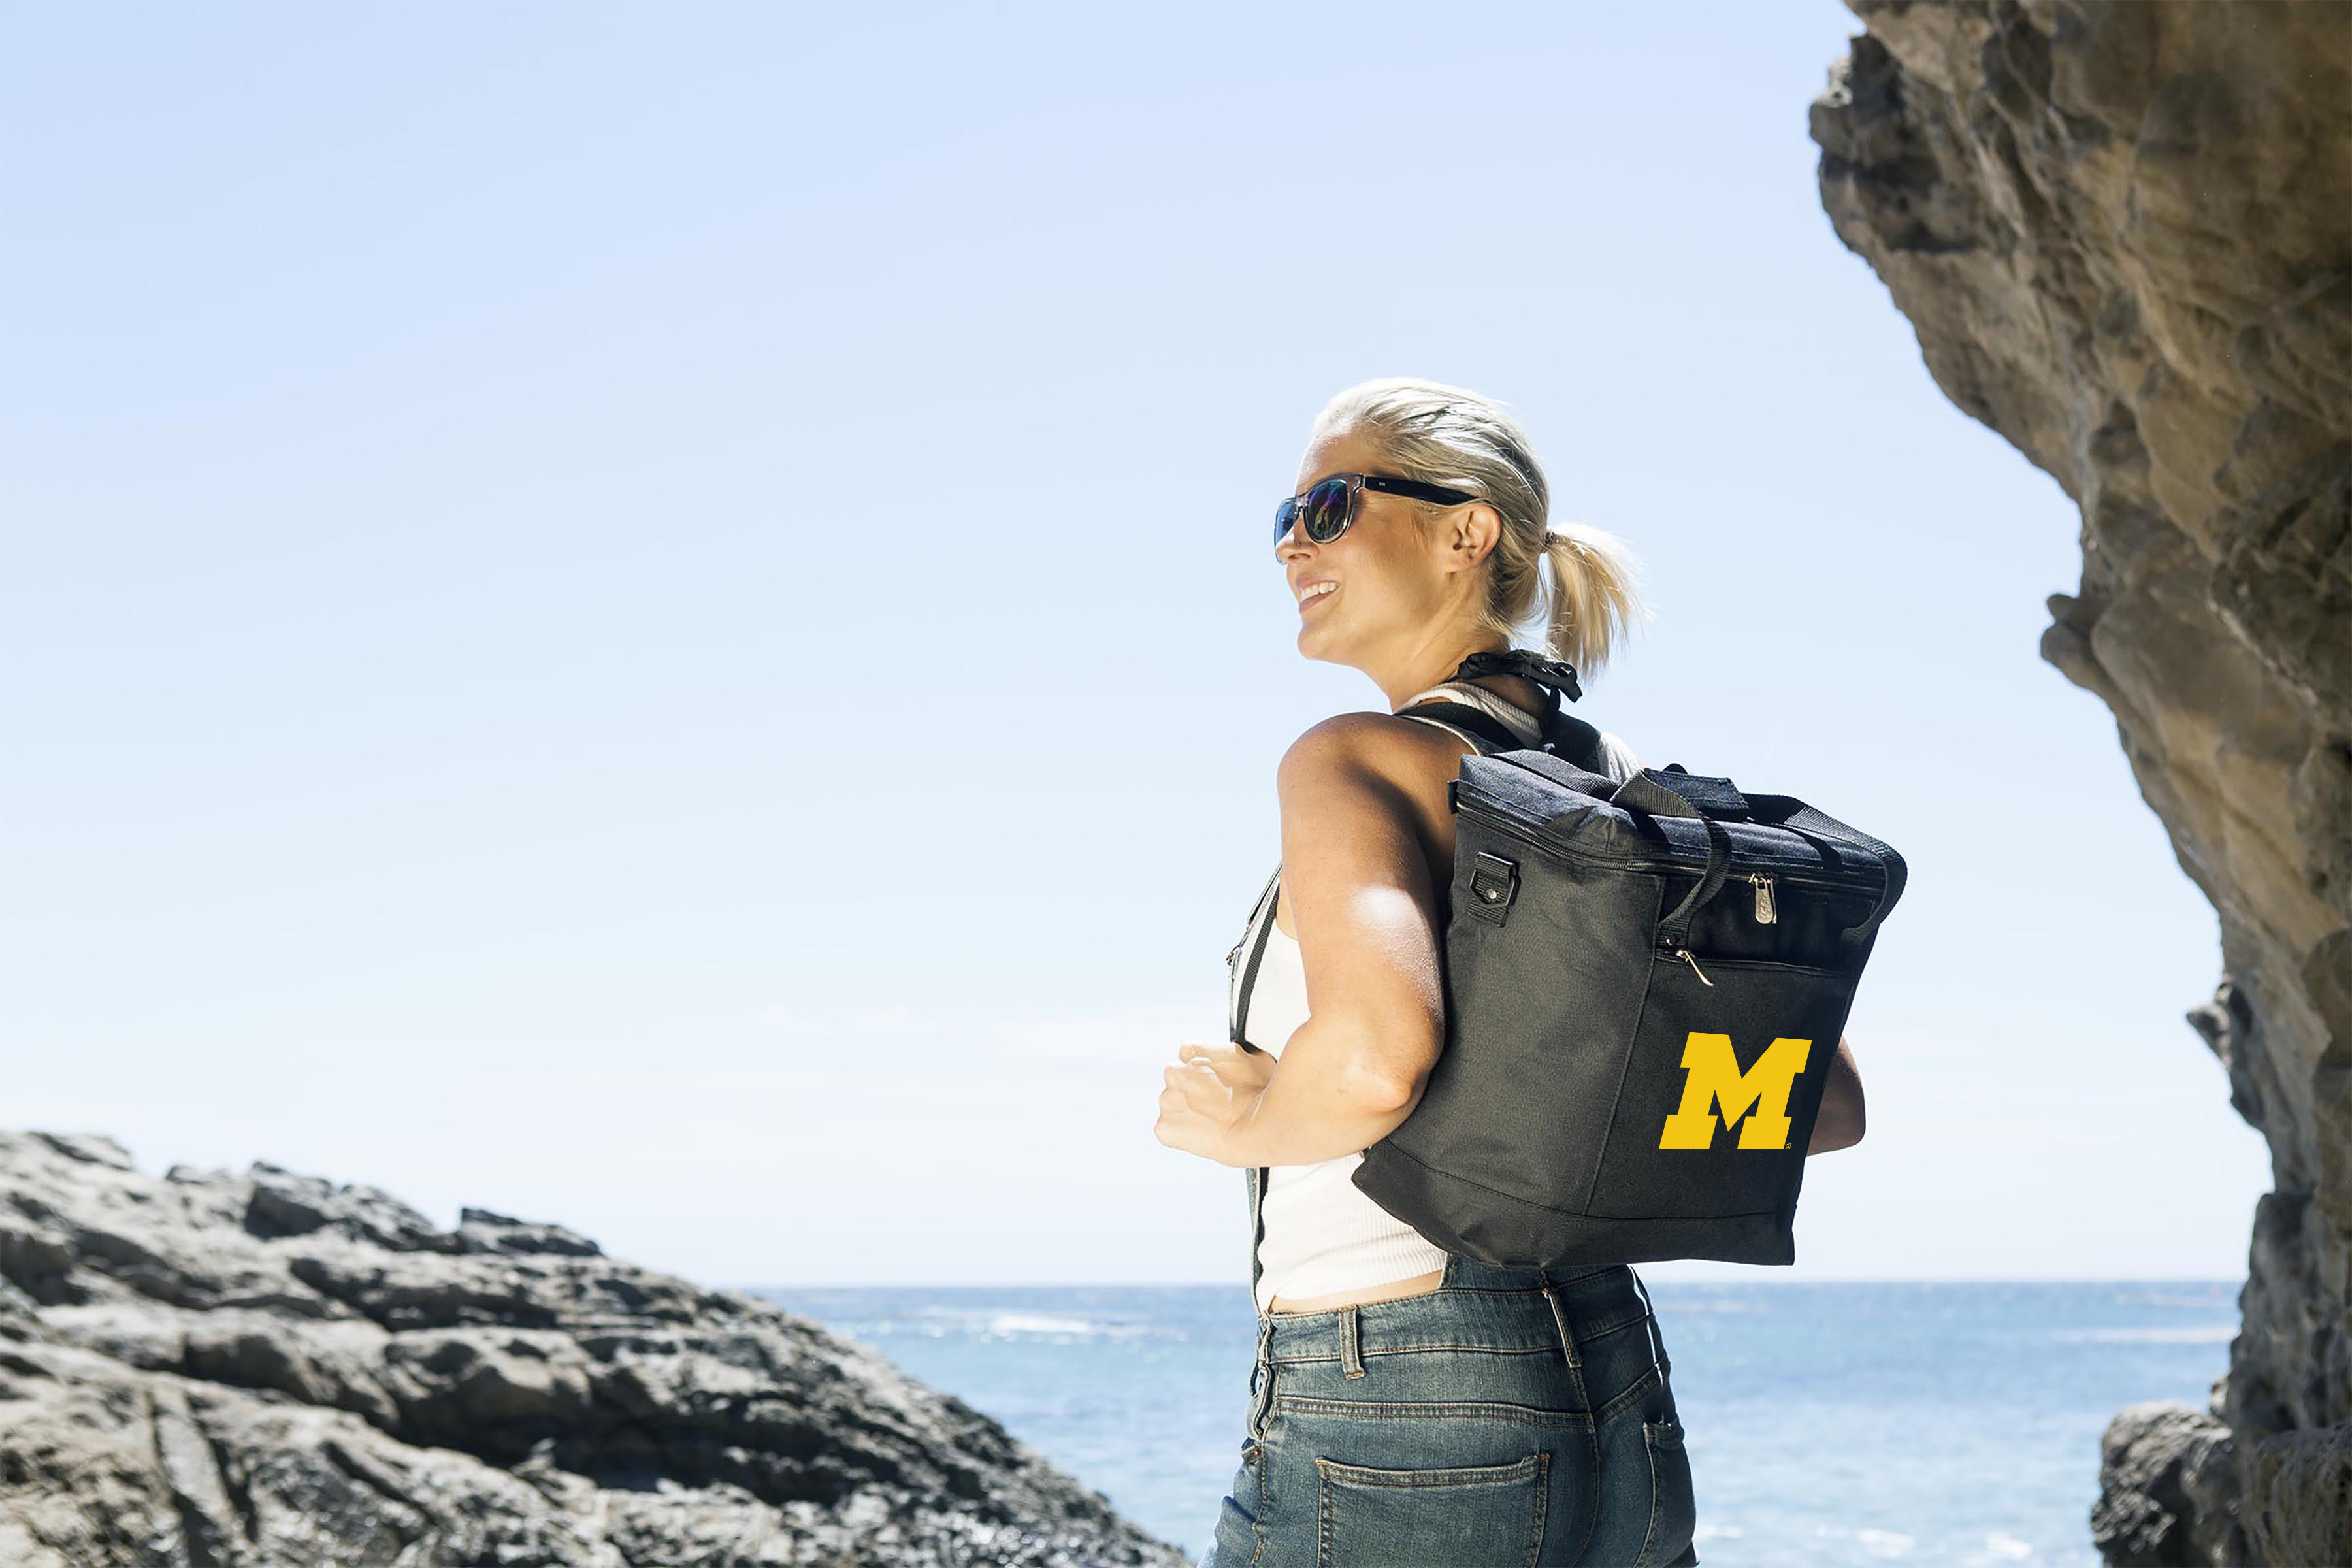 Michigan Wolverines - Montero Cooler Tote Bag